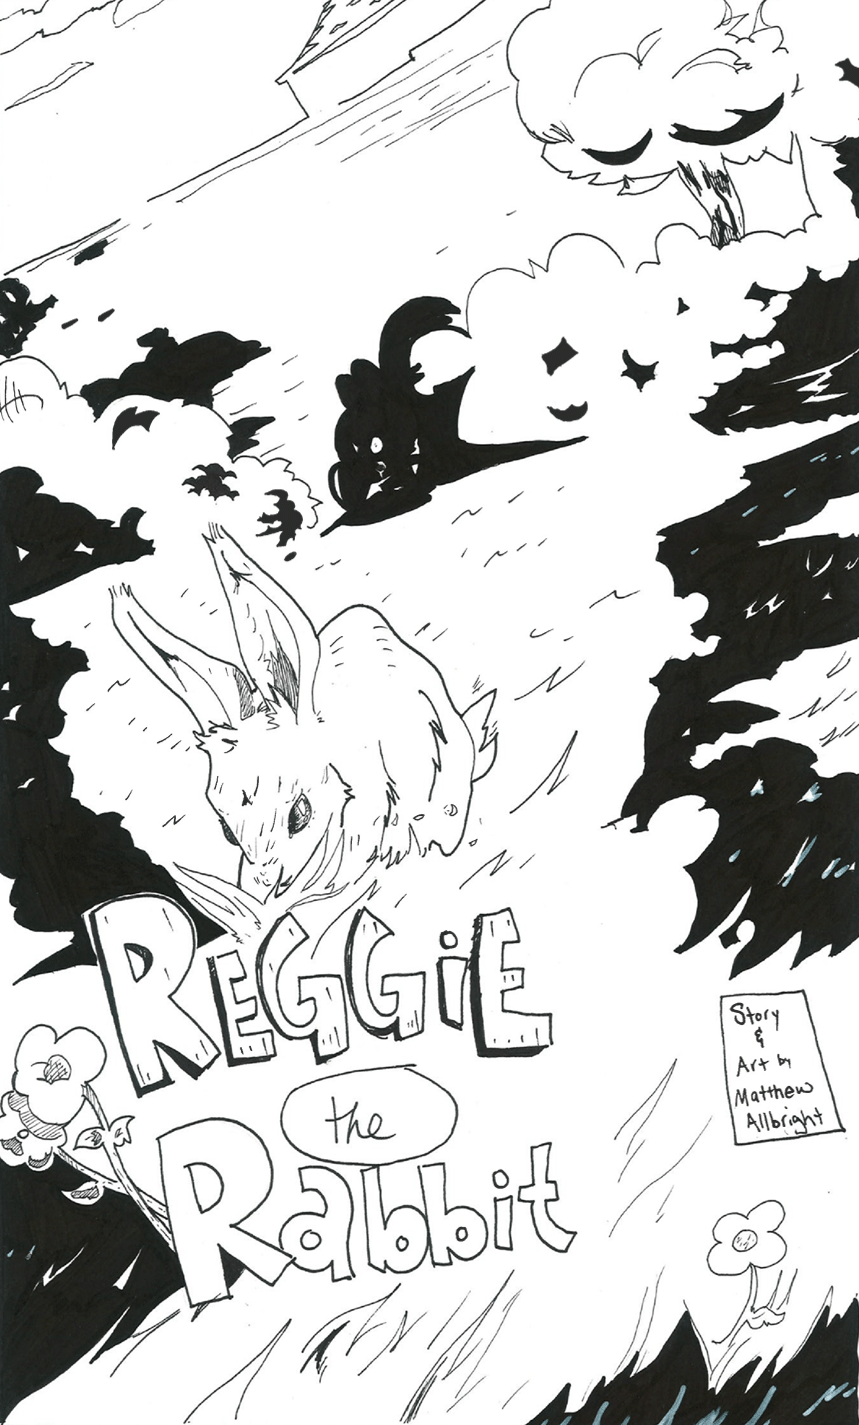 Reggie and the Rabbit b1p1